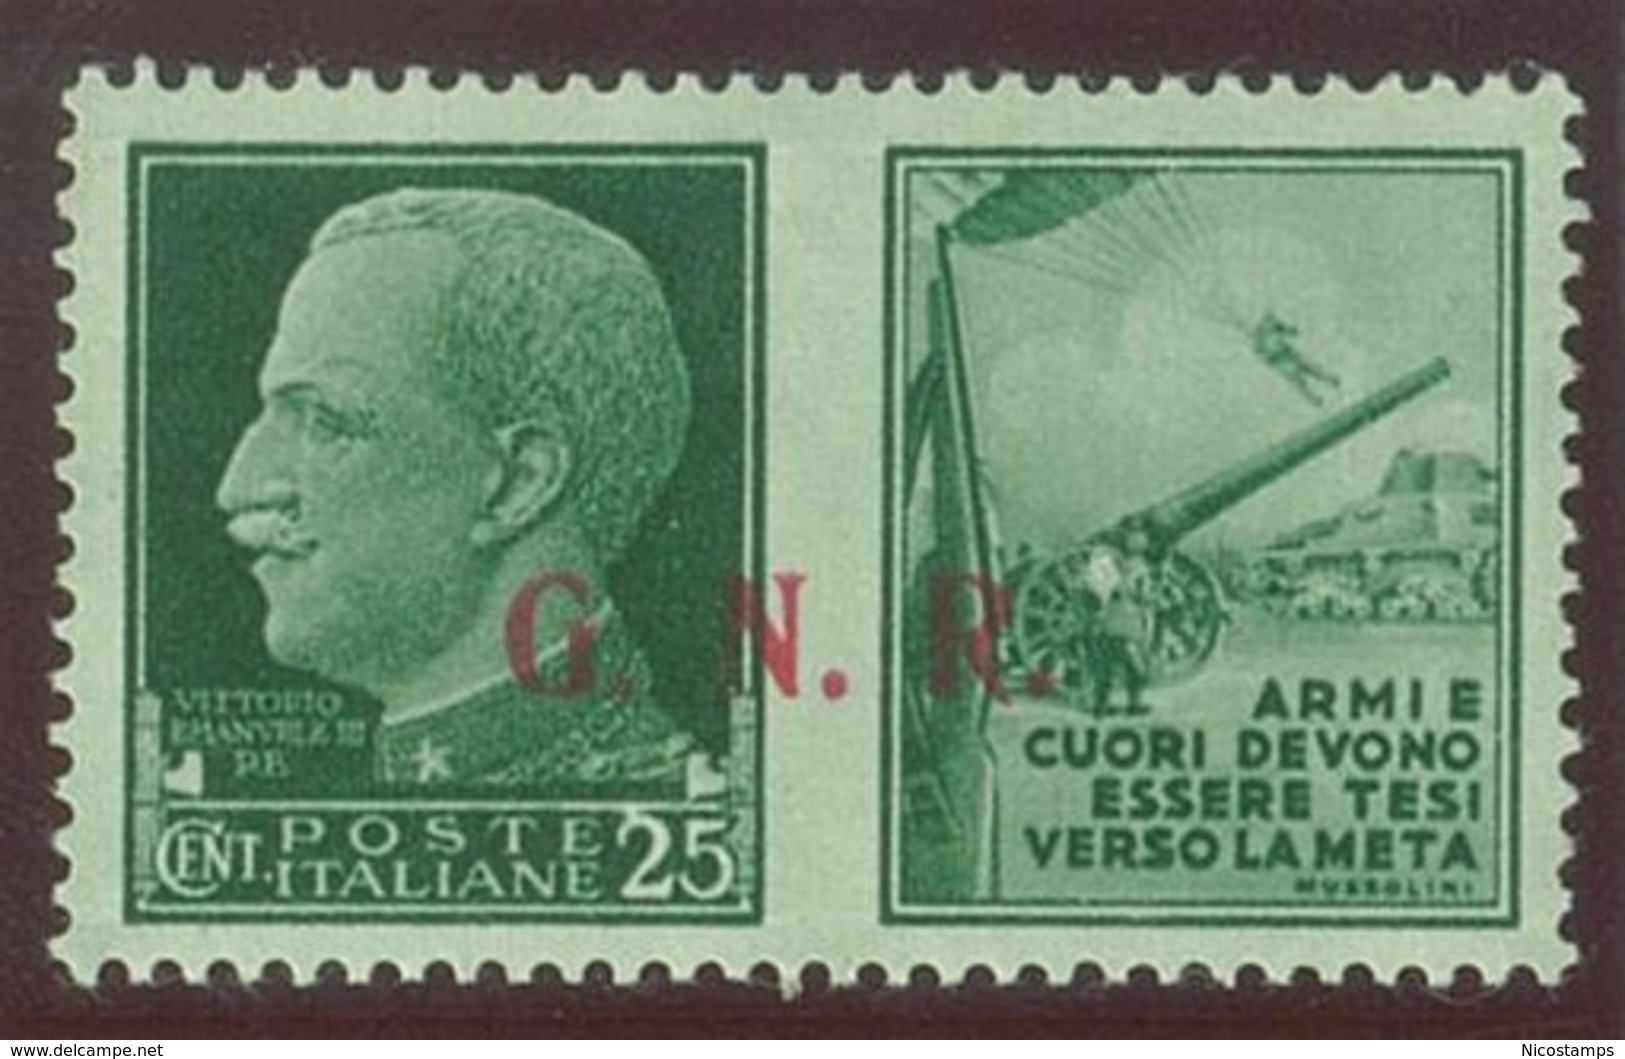 ITALIA REPUBBLICA SOCIALE ITALIANA (R.S.I.) SASS. P.G. 14/IIIed  NUOVO - Kriegspropaganda